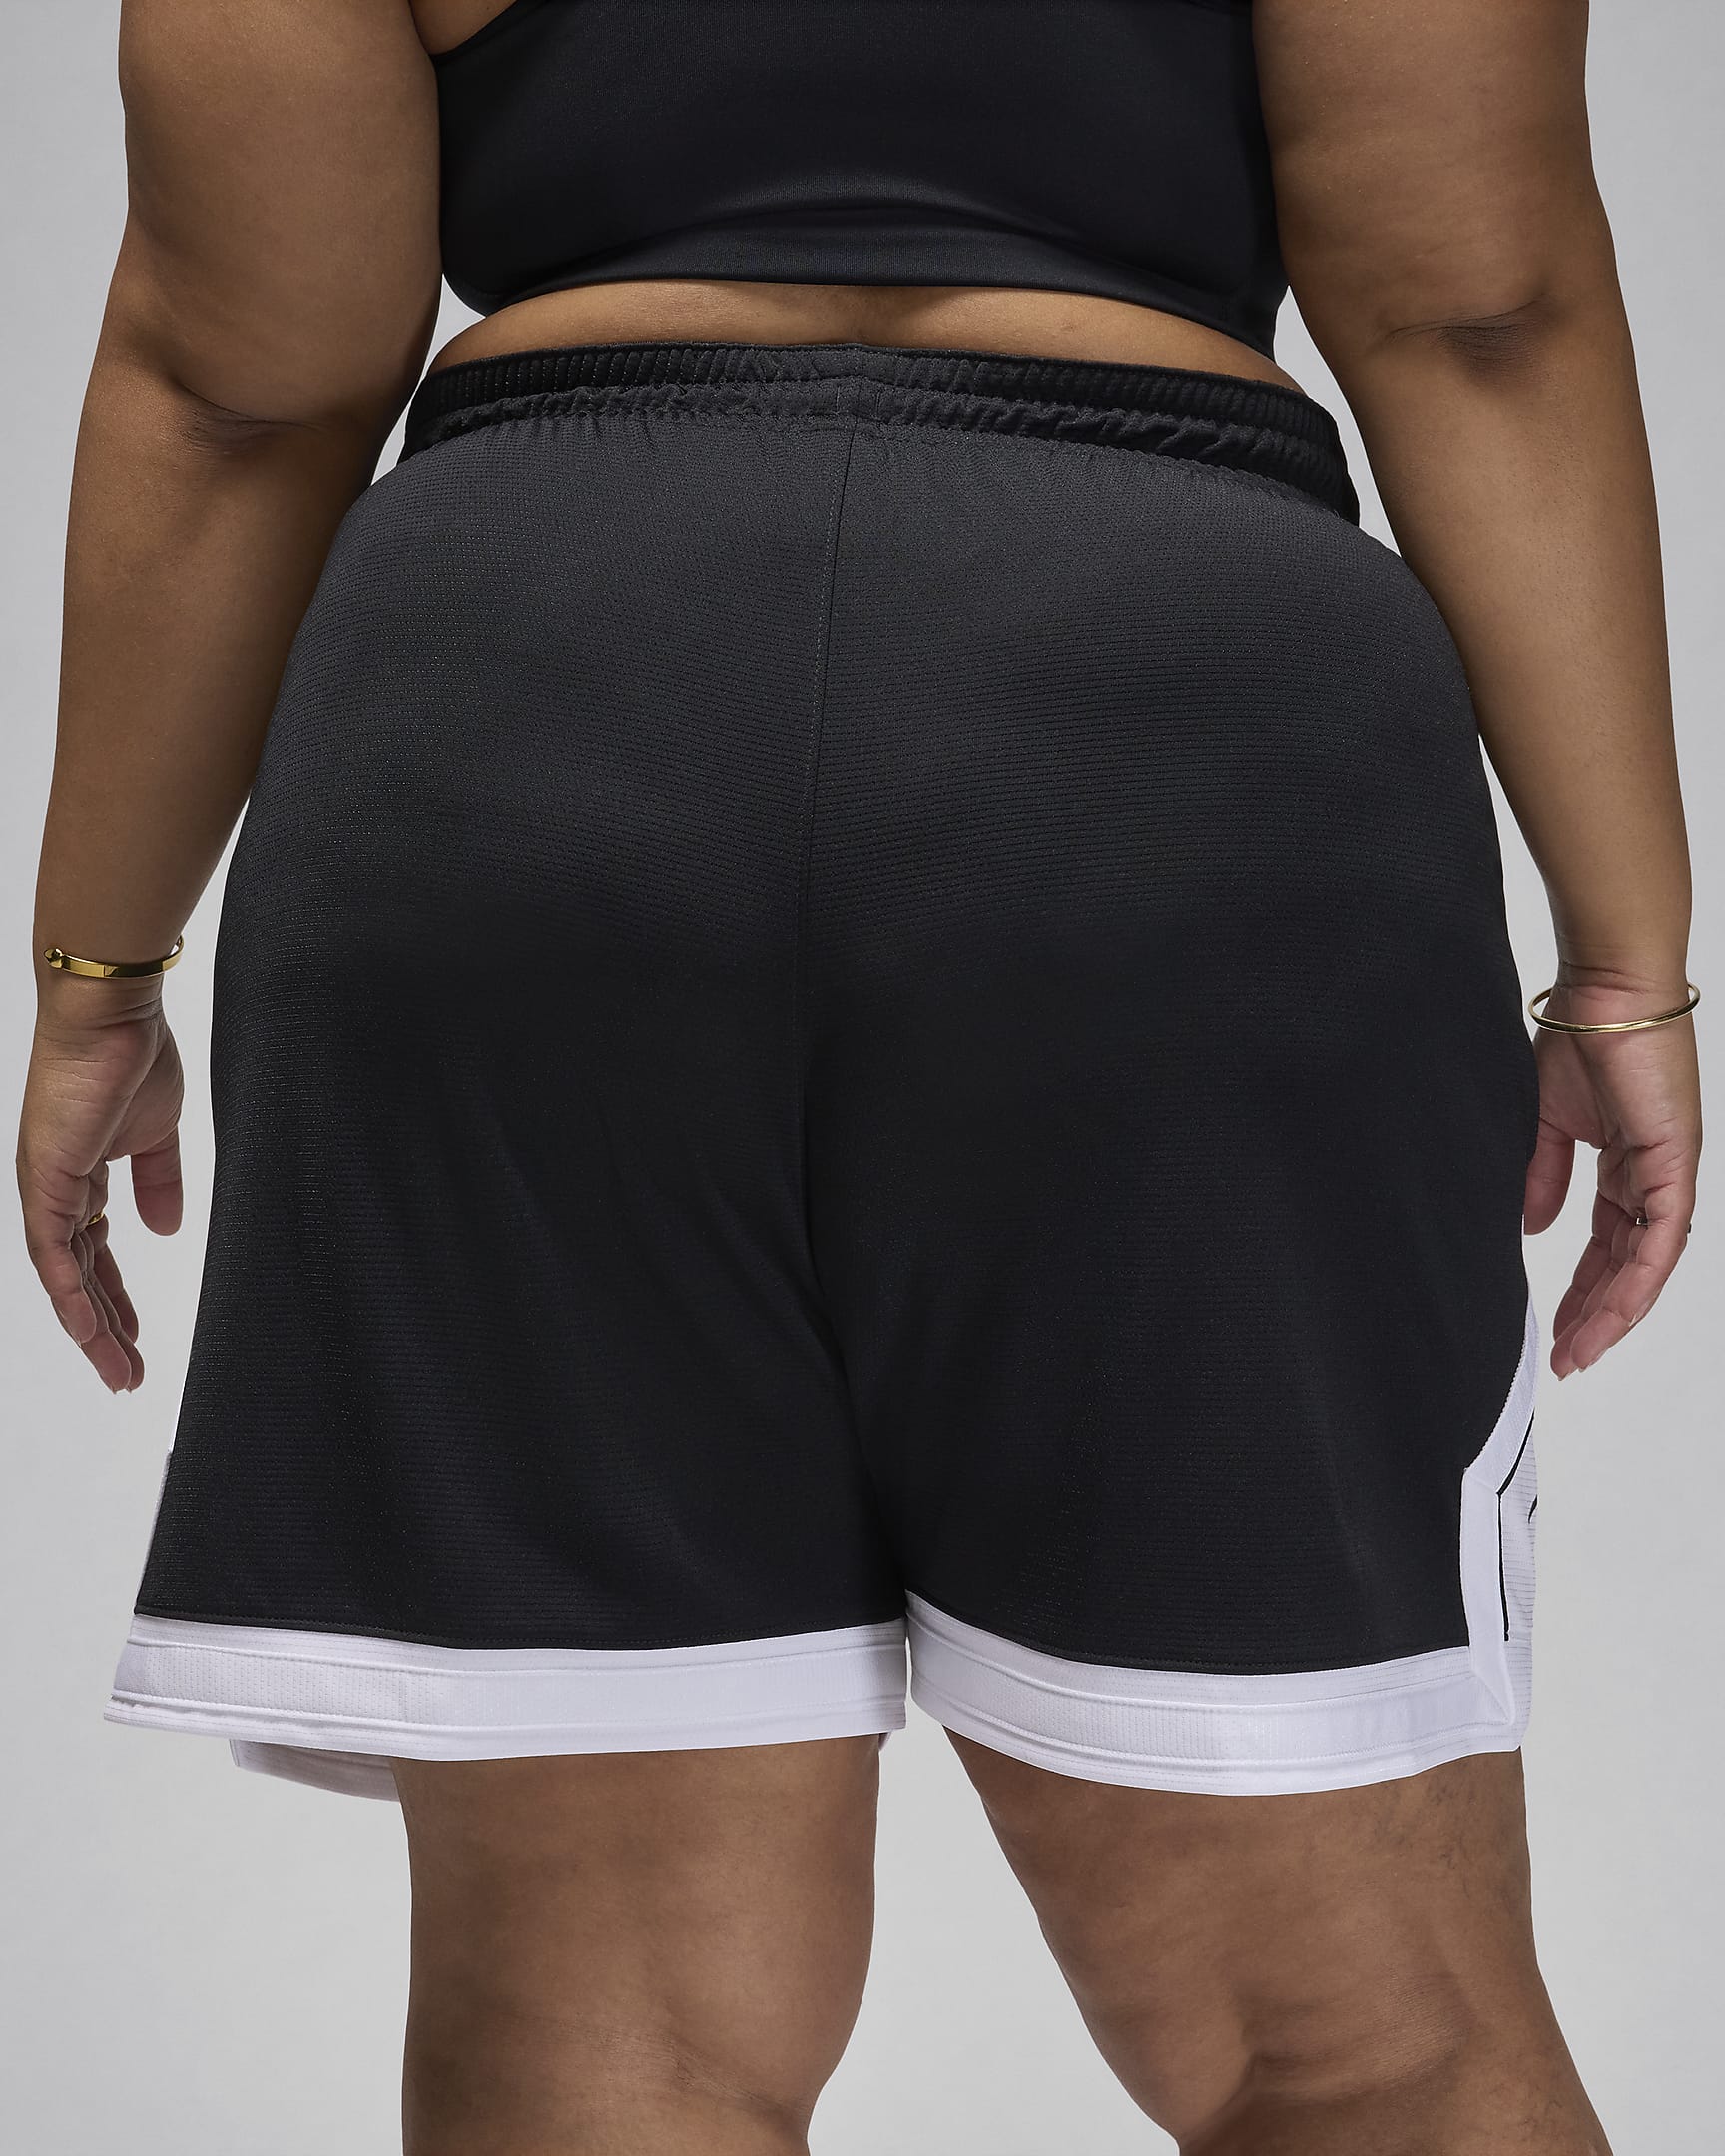 Jordan Sport Women's Diamond Shorts (Plus Size) - Black/White/White/Black